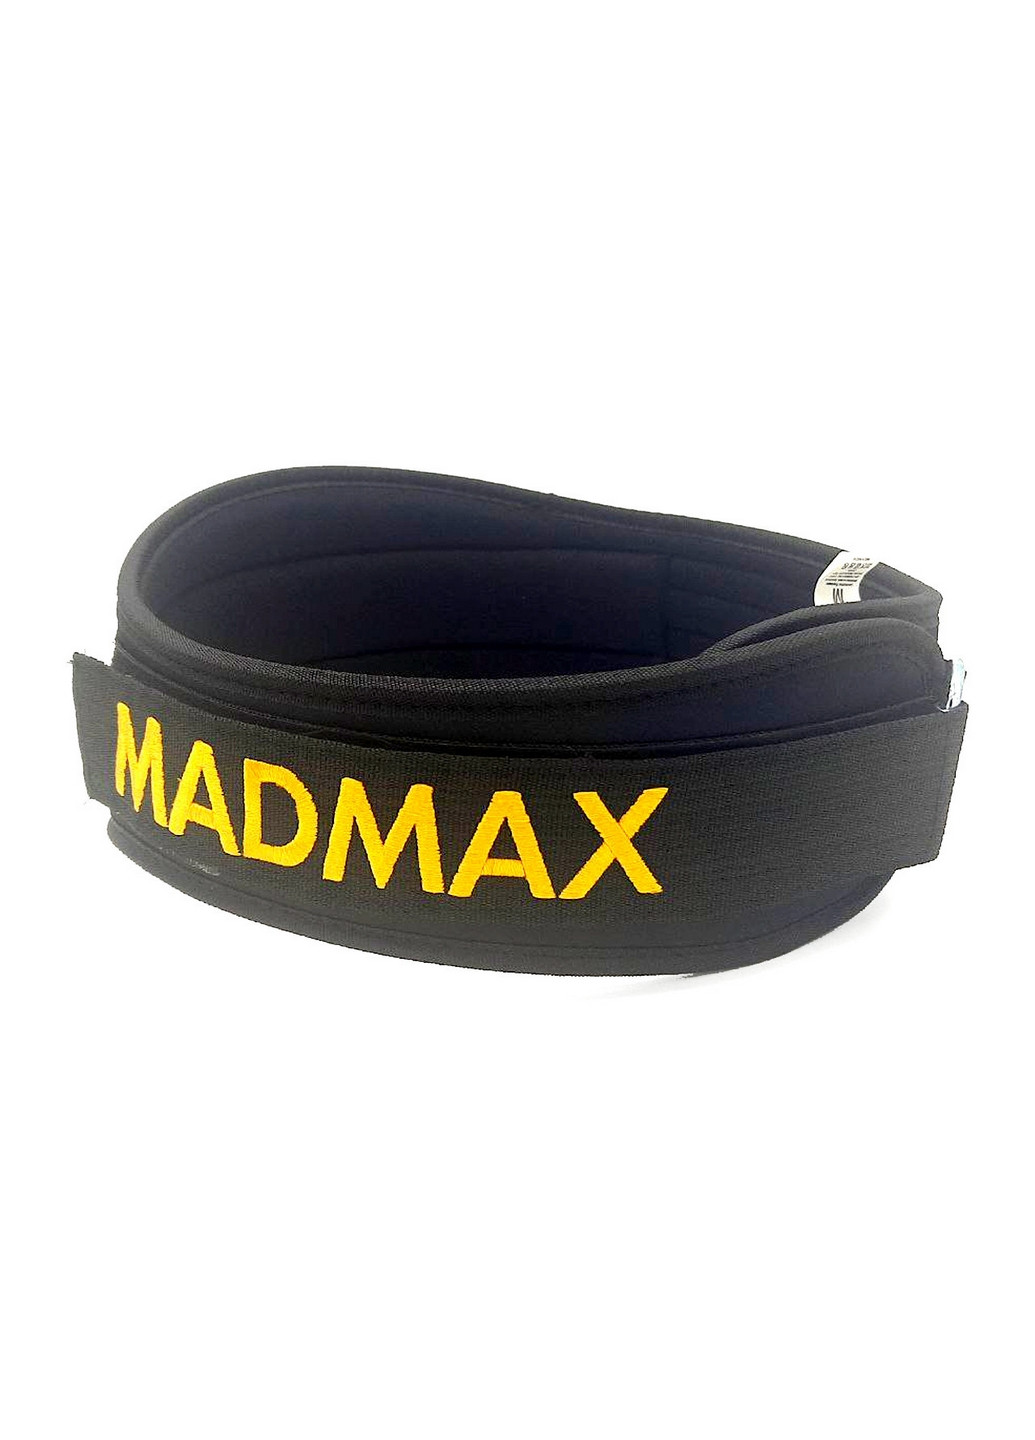 Пояс для тяжелой атлетики Body Conform XXL Mad Max (263426070)